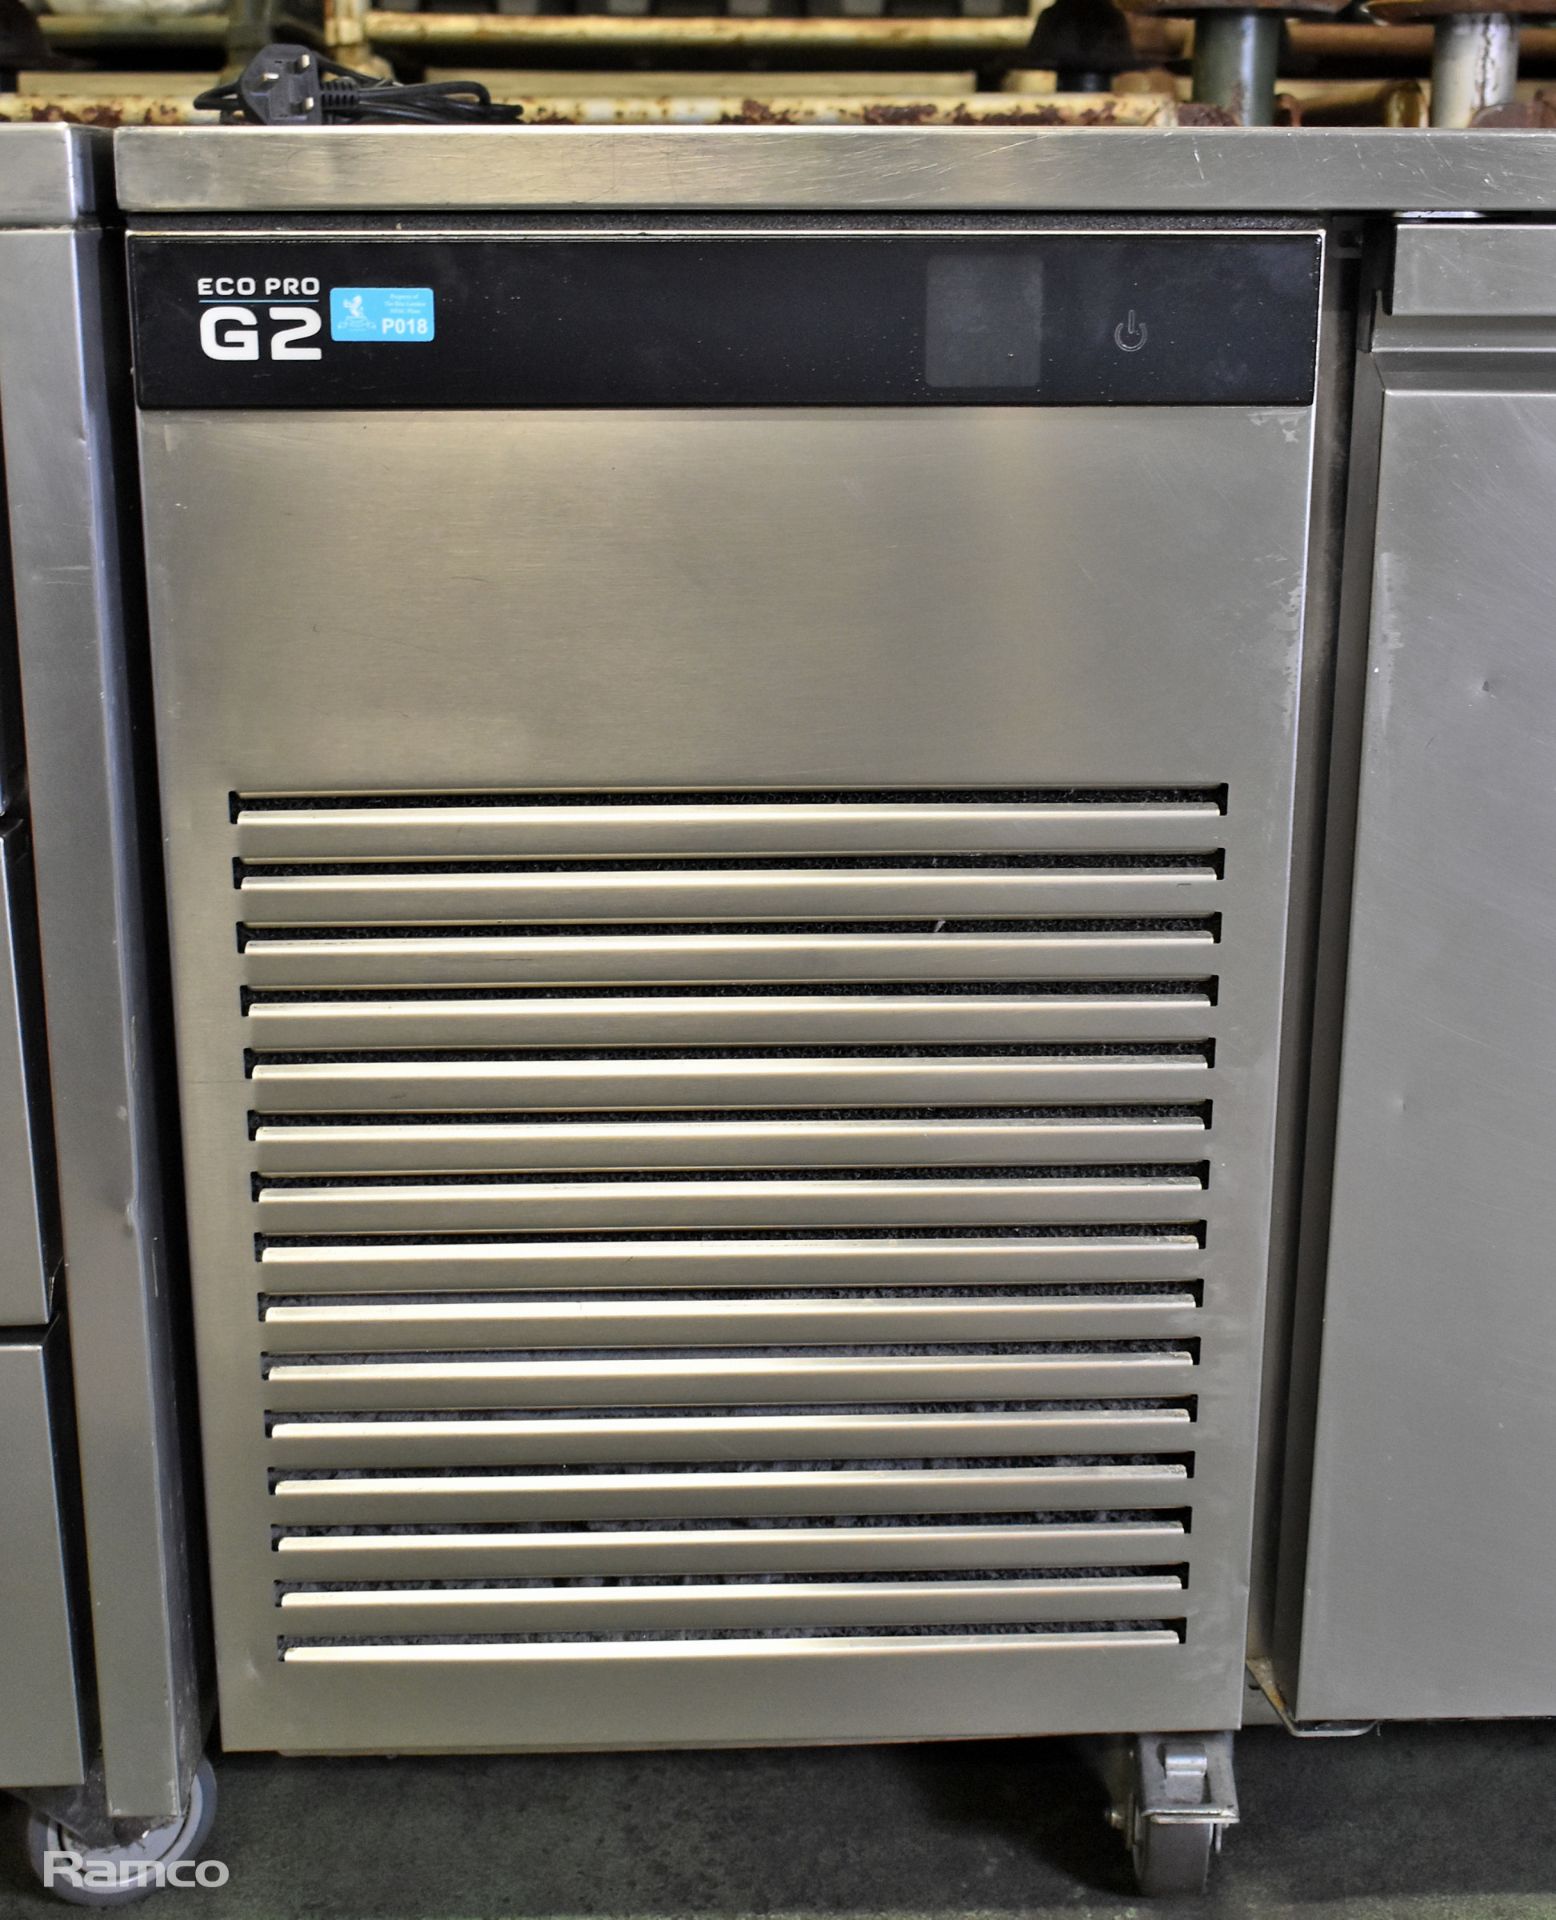 Foster Eco Pro G2 1 door, 6 drawer bench fridge, 240V - L 187 x W 70 x H 56cm - Image 9 of 10